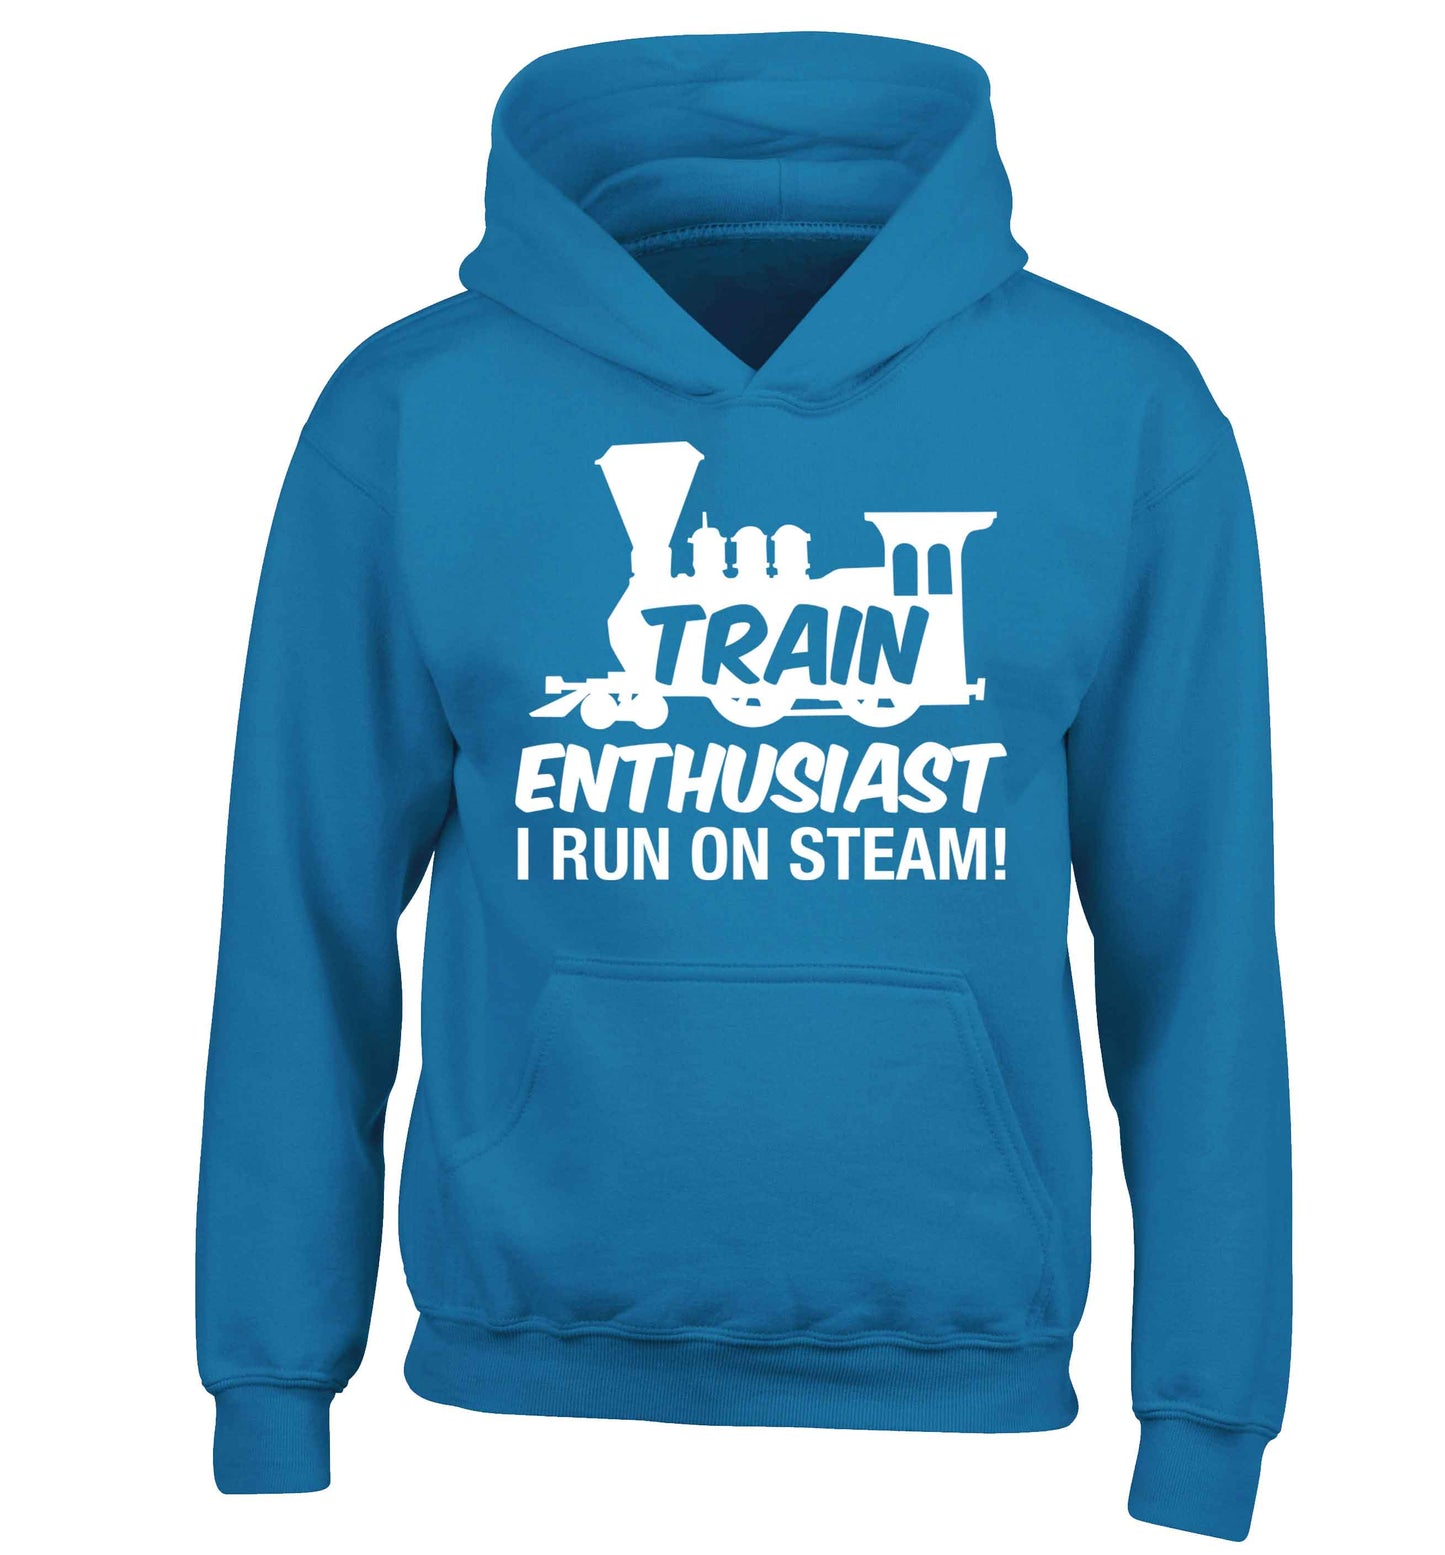 Train enthusiast I run on steam children's blue hoodie 12-13 Years